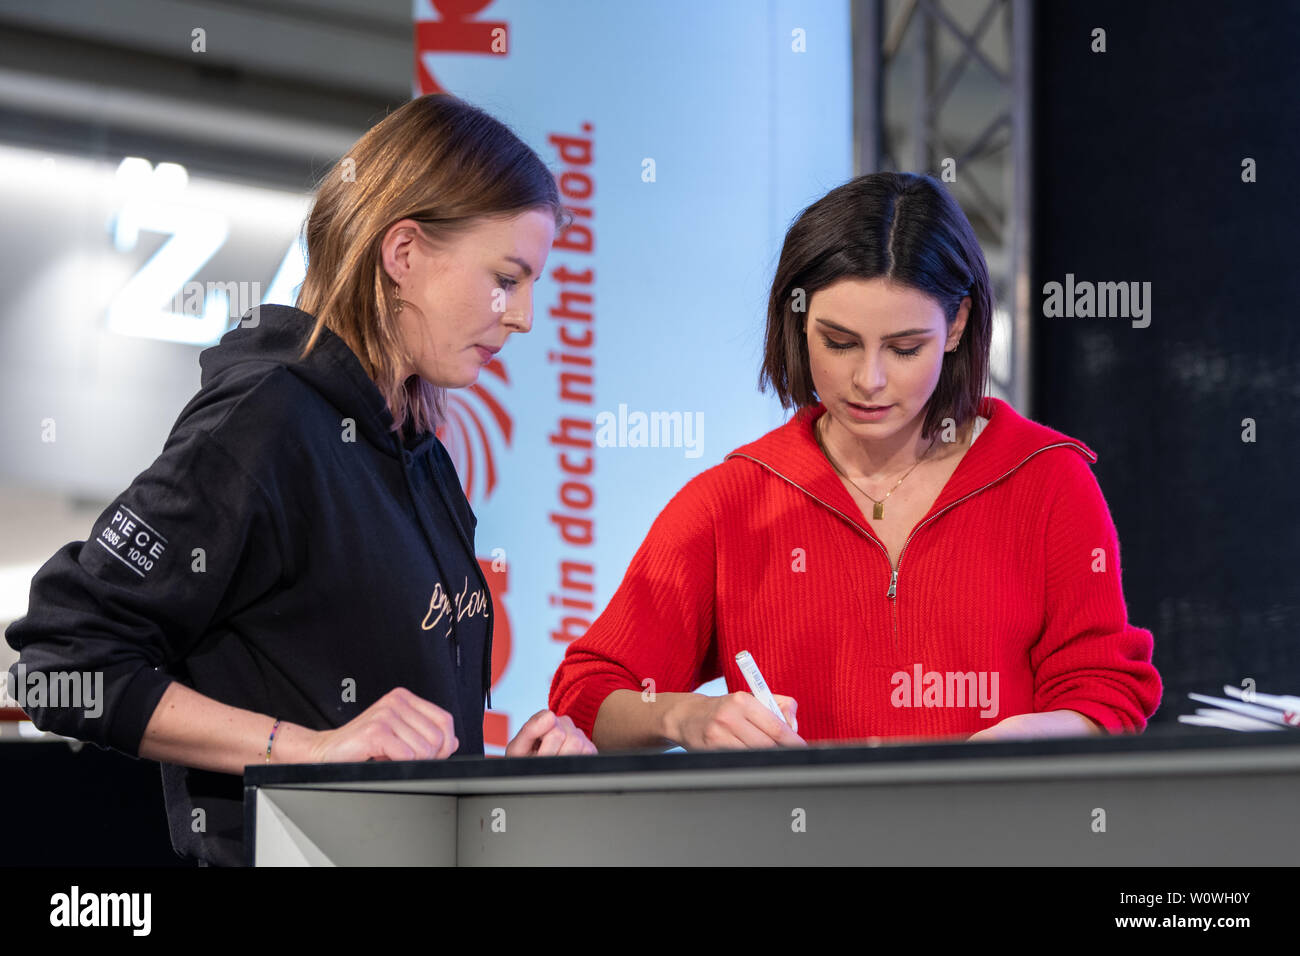 Lena Meyer-Landrut Autogrammstunde mit zu ihrem Albumstart "Sólo el amor, L" im ALEXA Berlín / 090419 Foto de stock